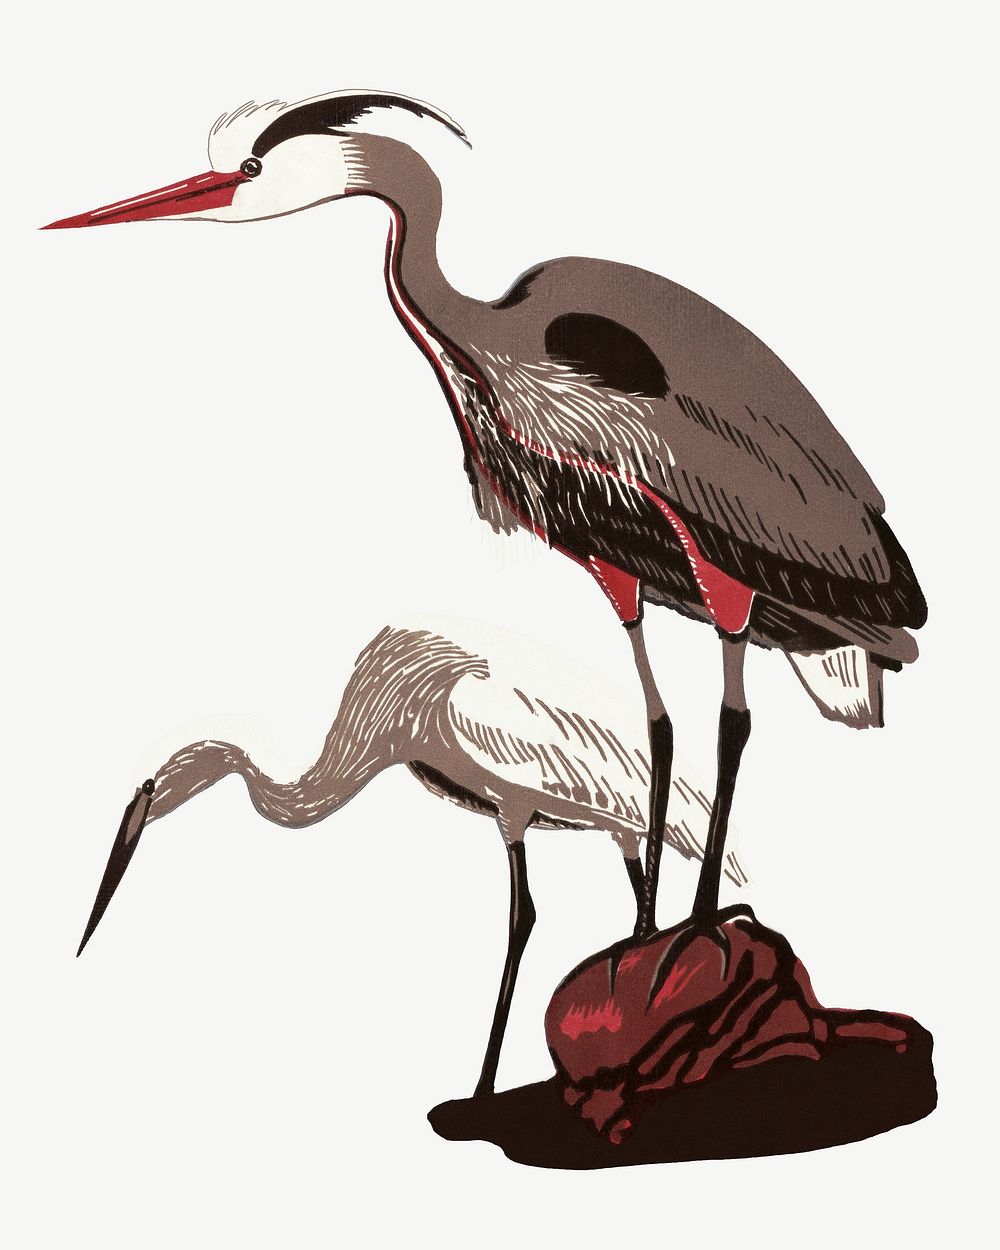 Heron bird, vintage animal collage element psd.   Remixed by rawpixel.